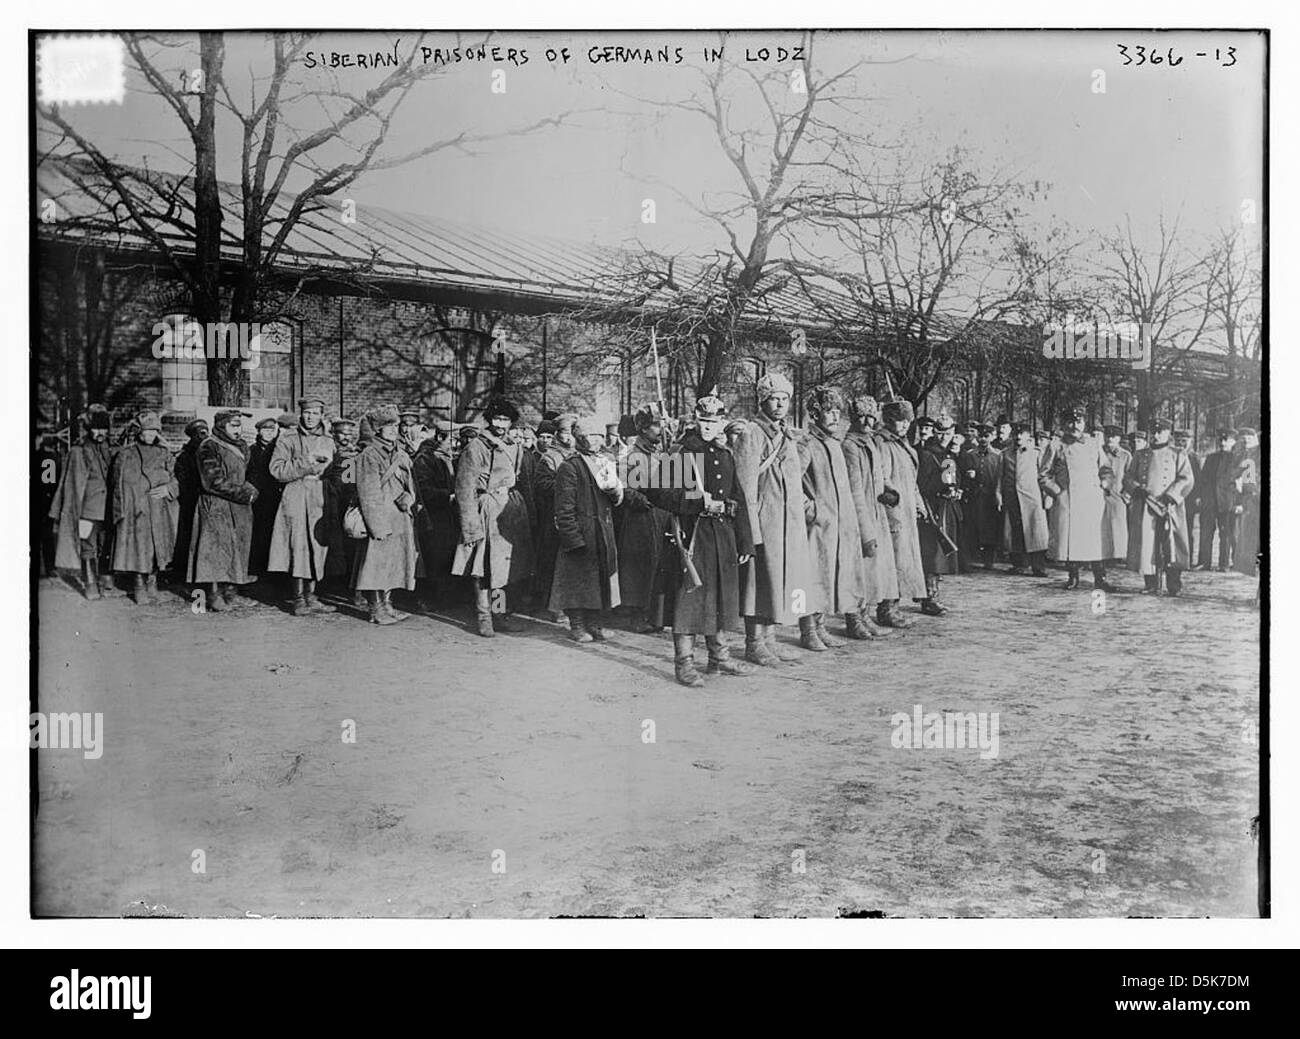 Siberian prisoners of Germans in Lodz (LOC) Stock Photo